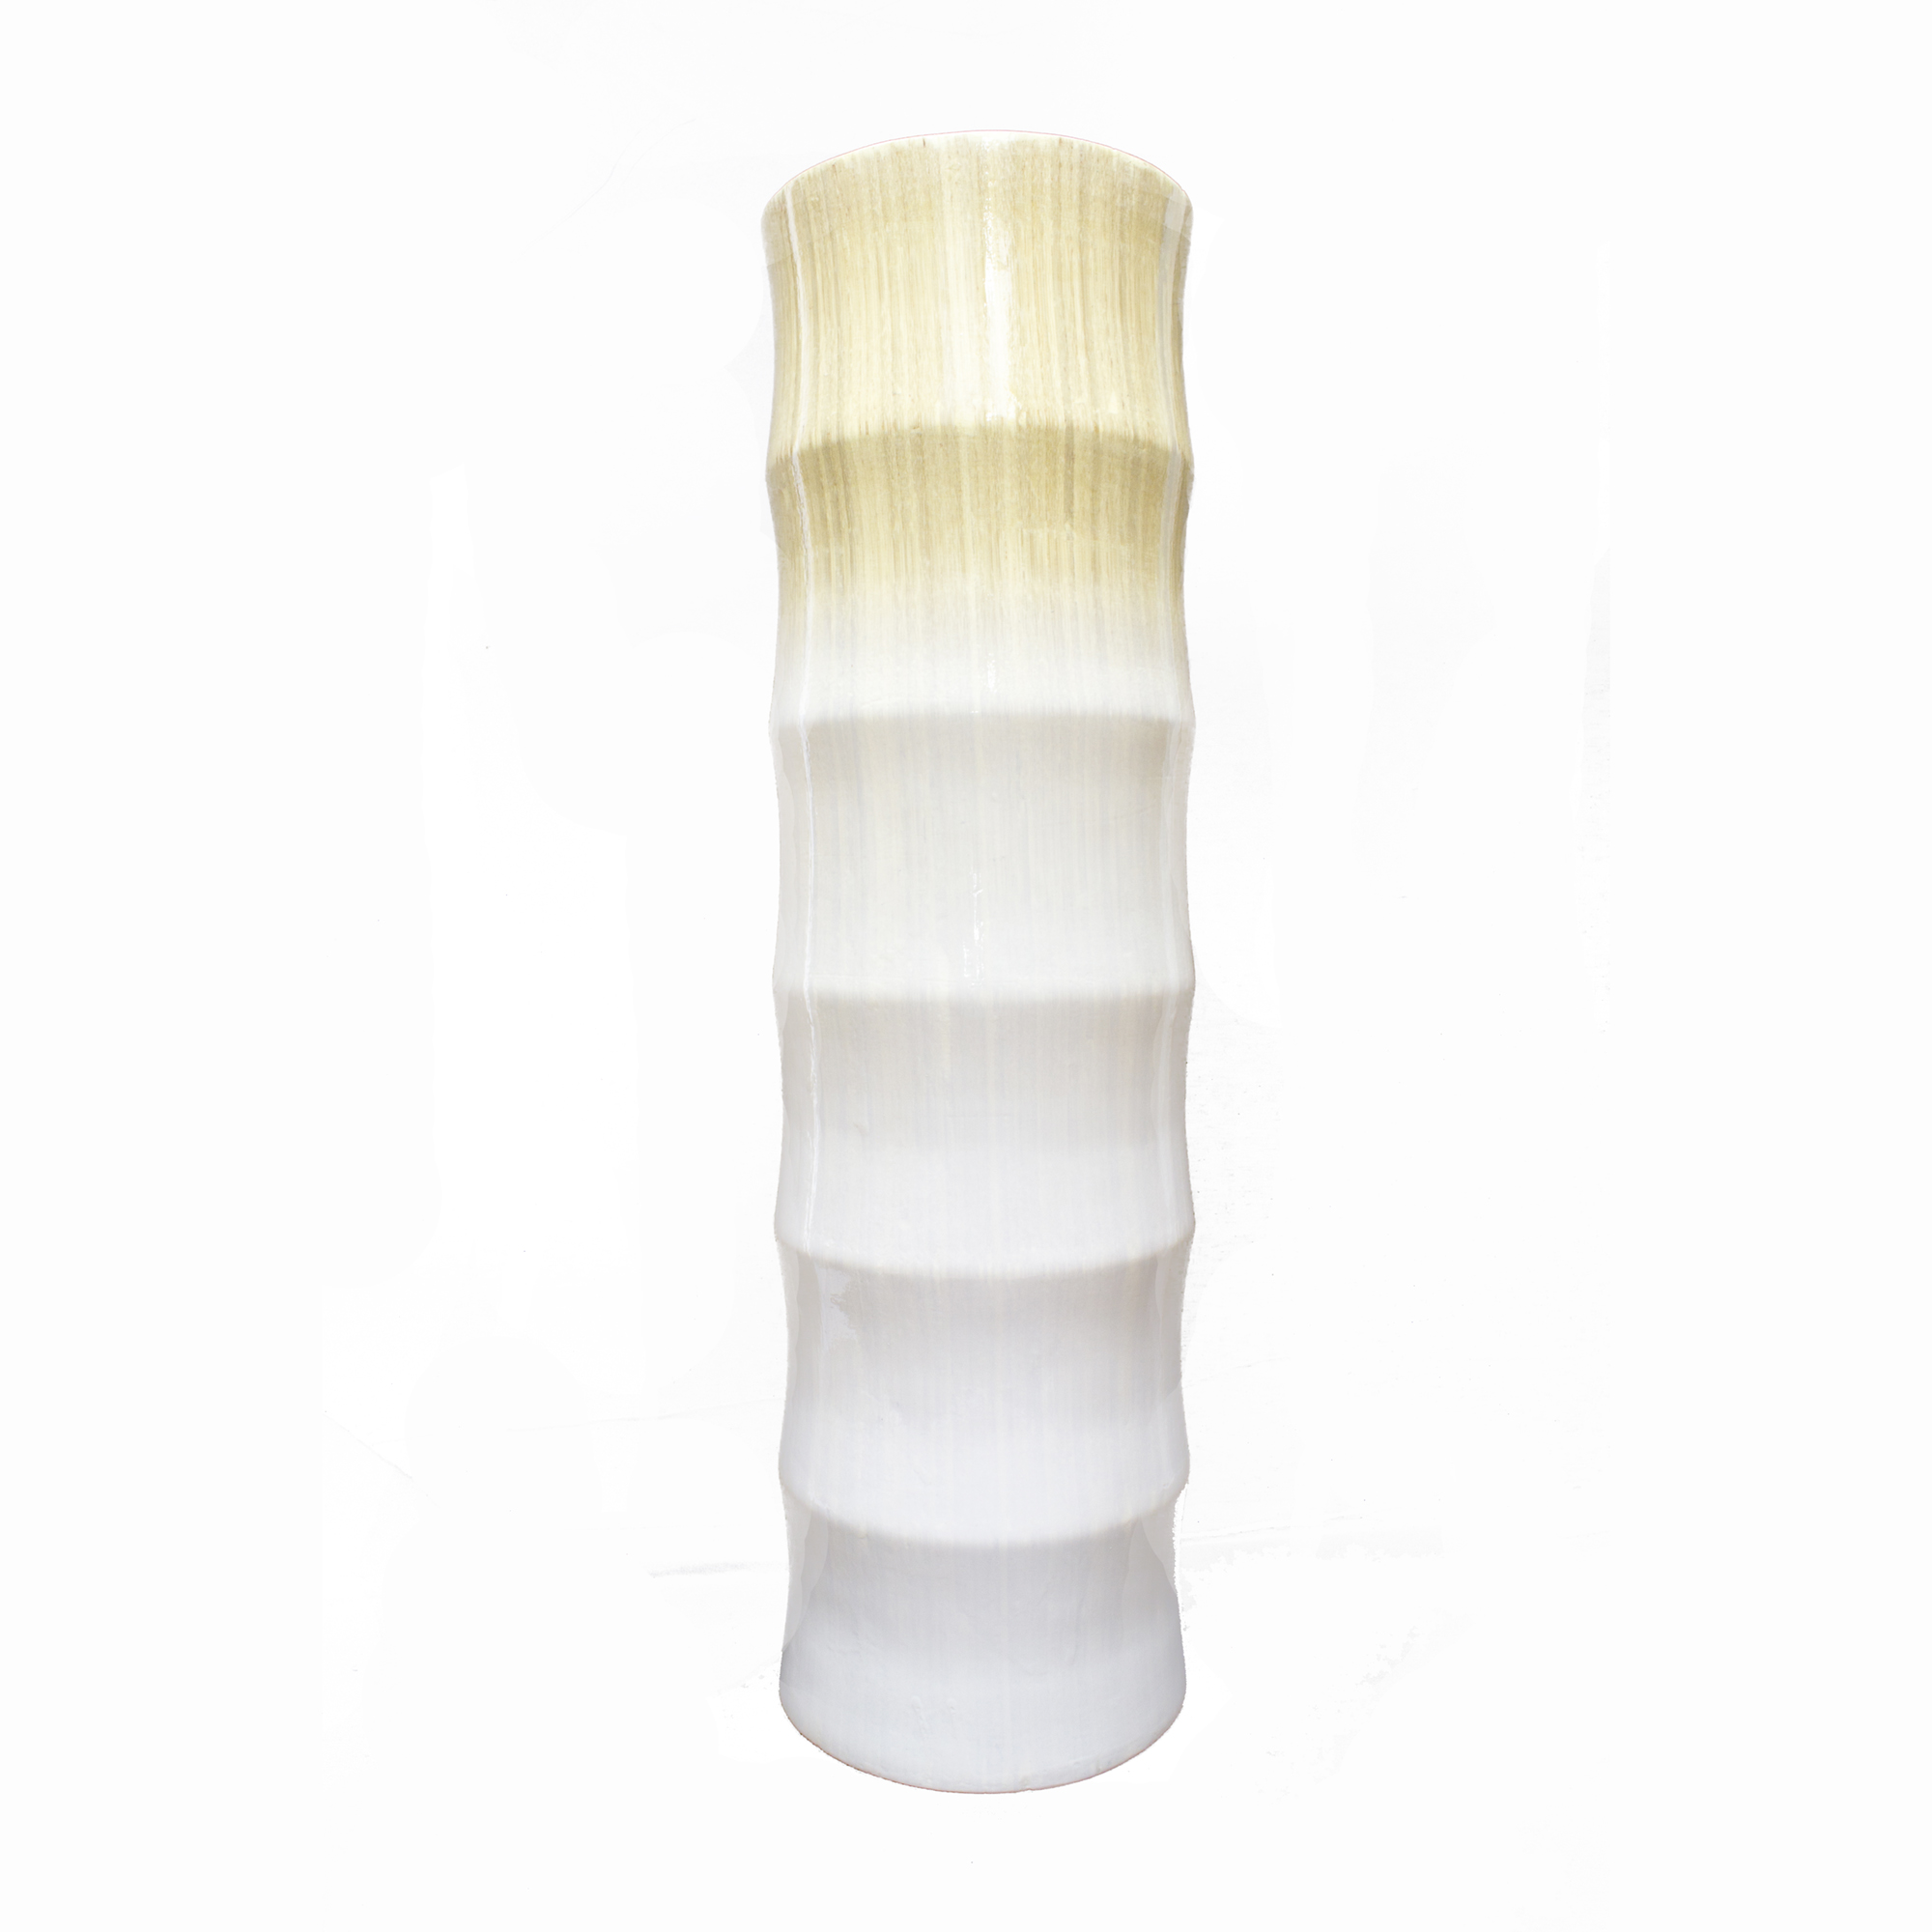 7" X 7" X 24" Gray Bamboo Bamboo Chute Vase